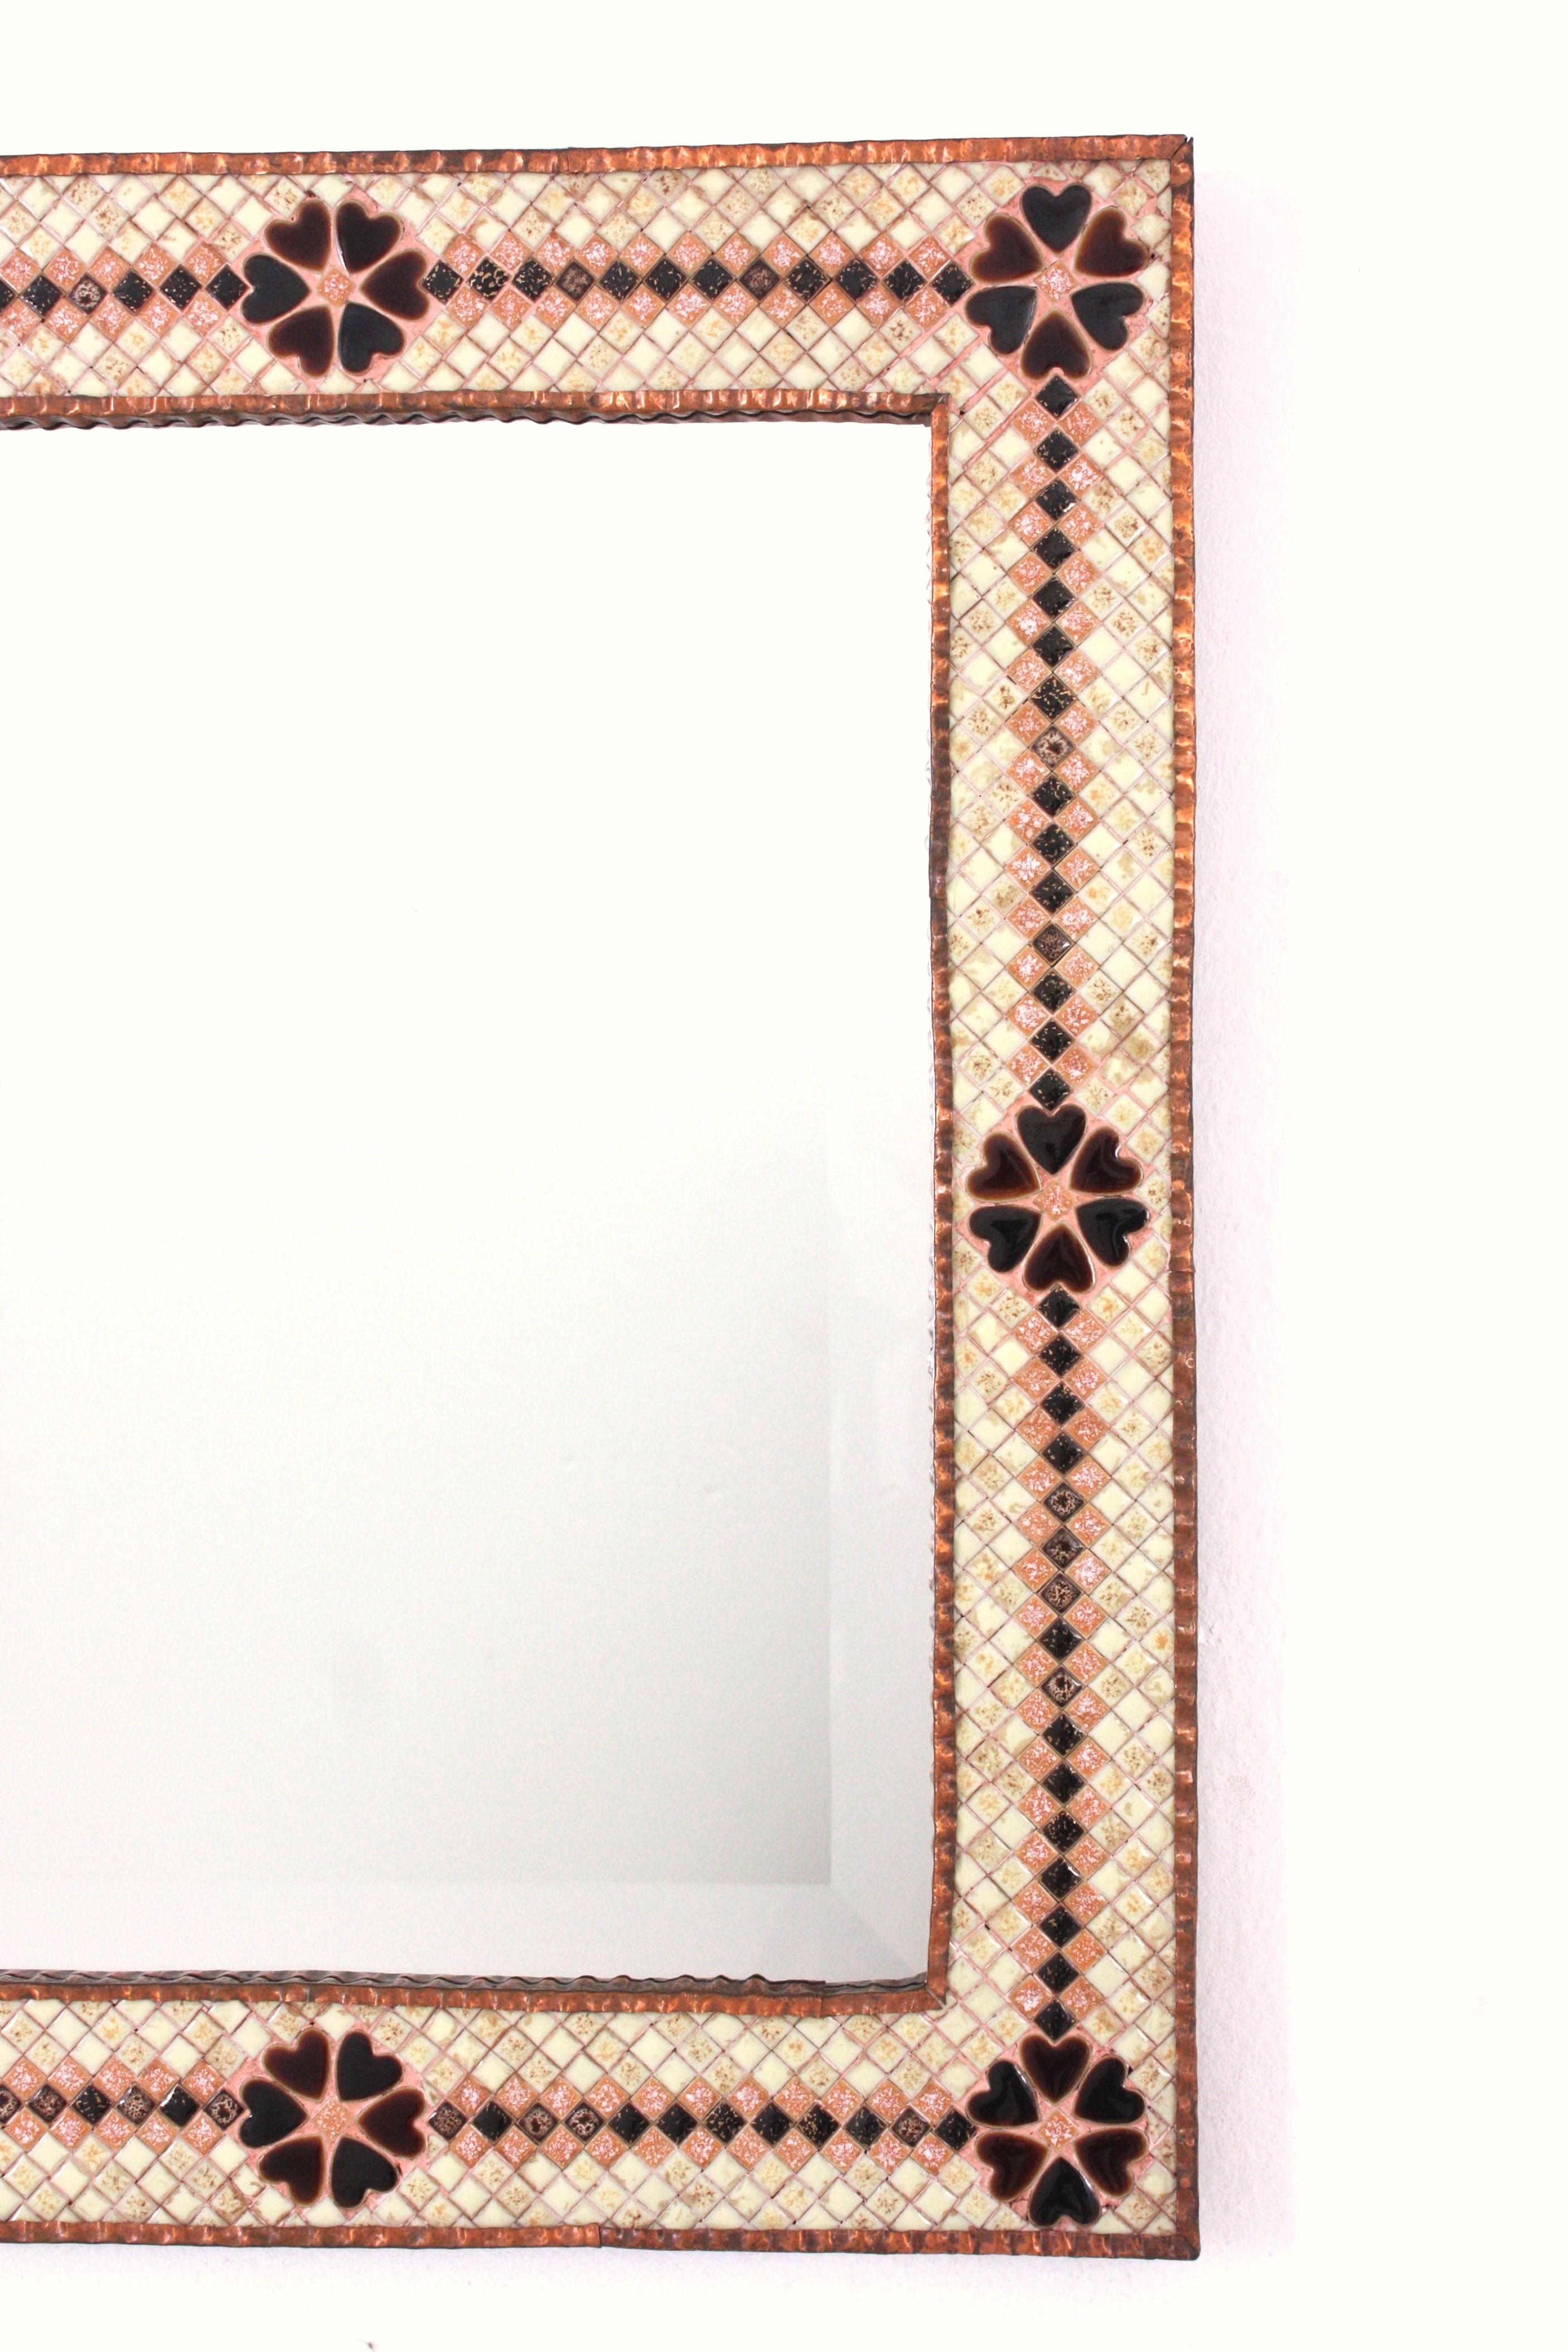 Spanish Mosaic Rectangular Mirror in Glazed Ceramic, 1950s For Sale 6